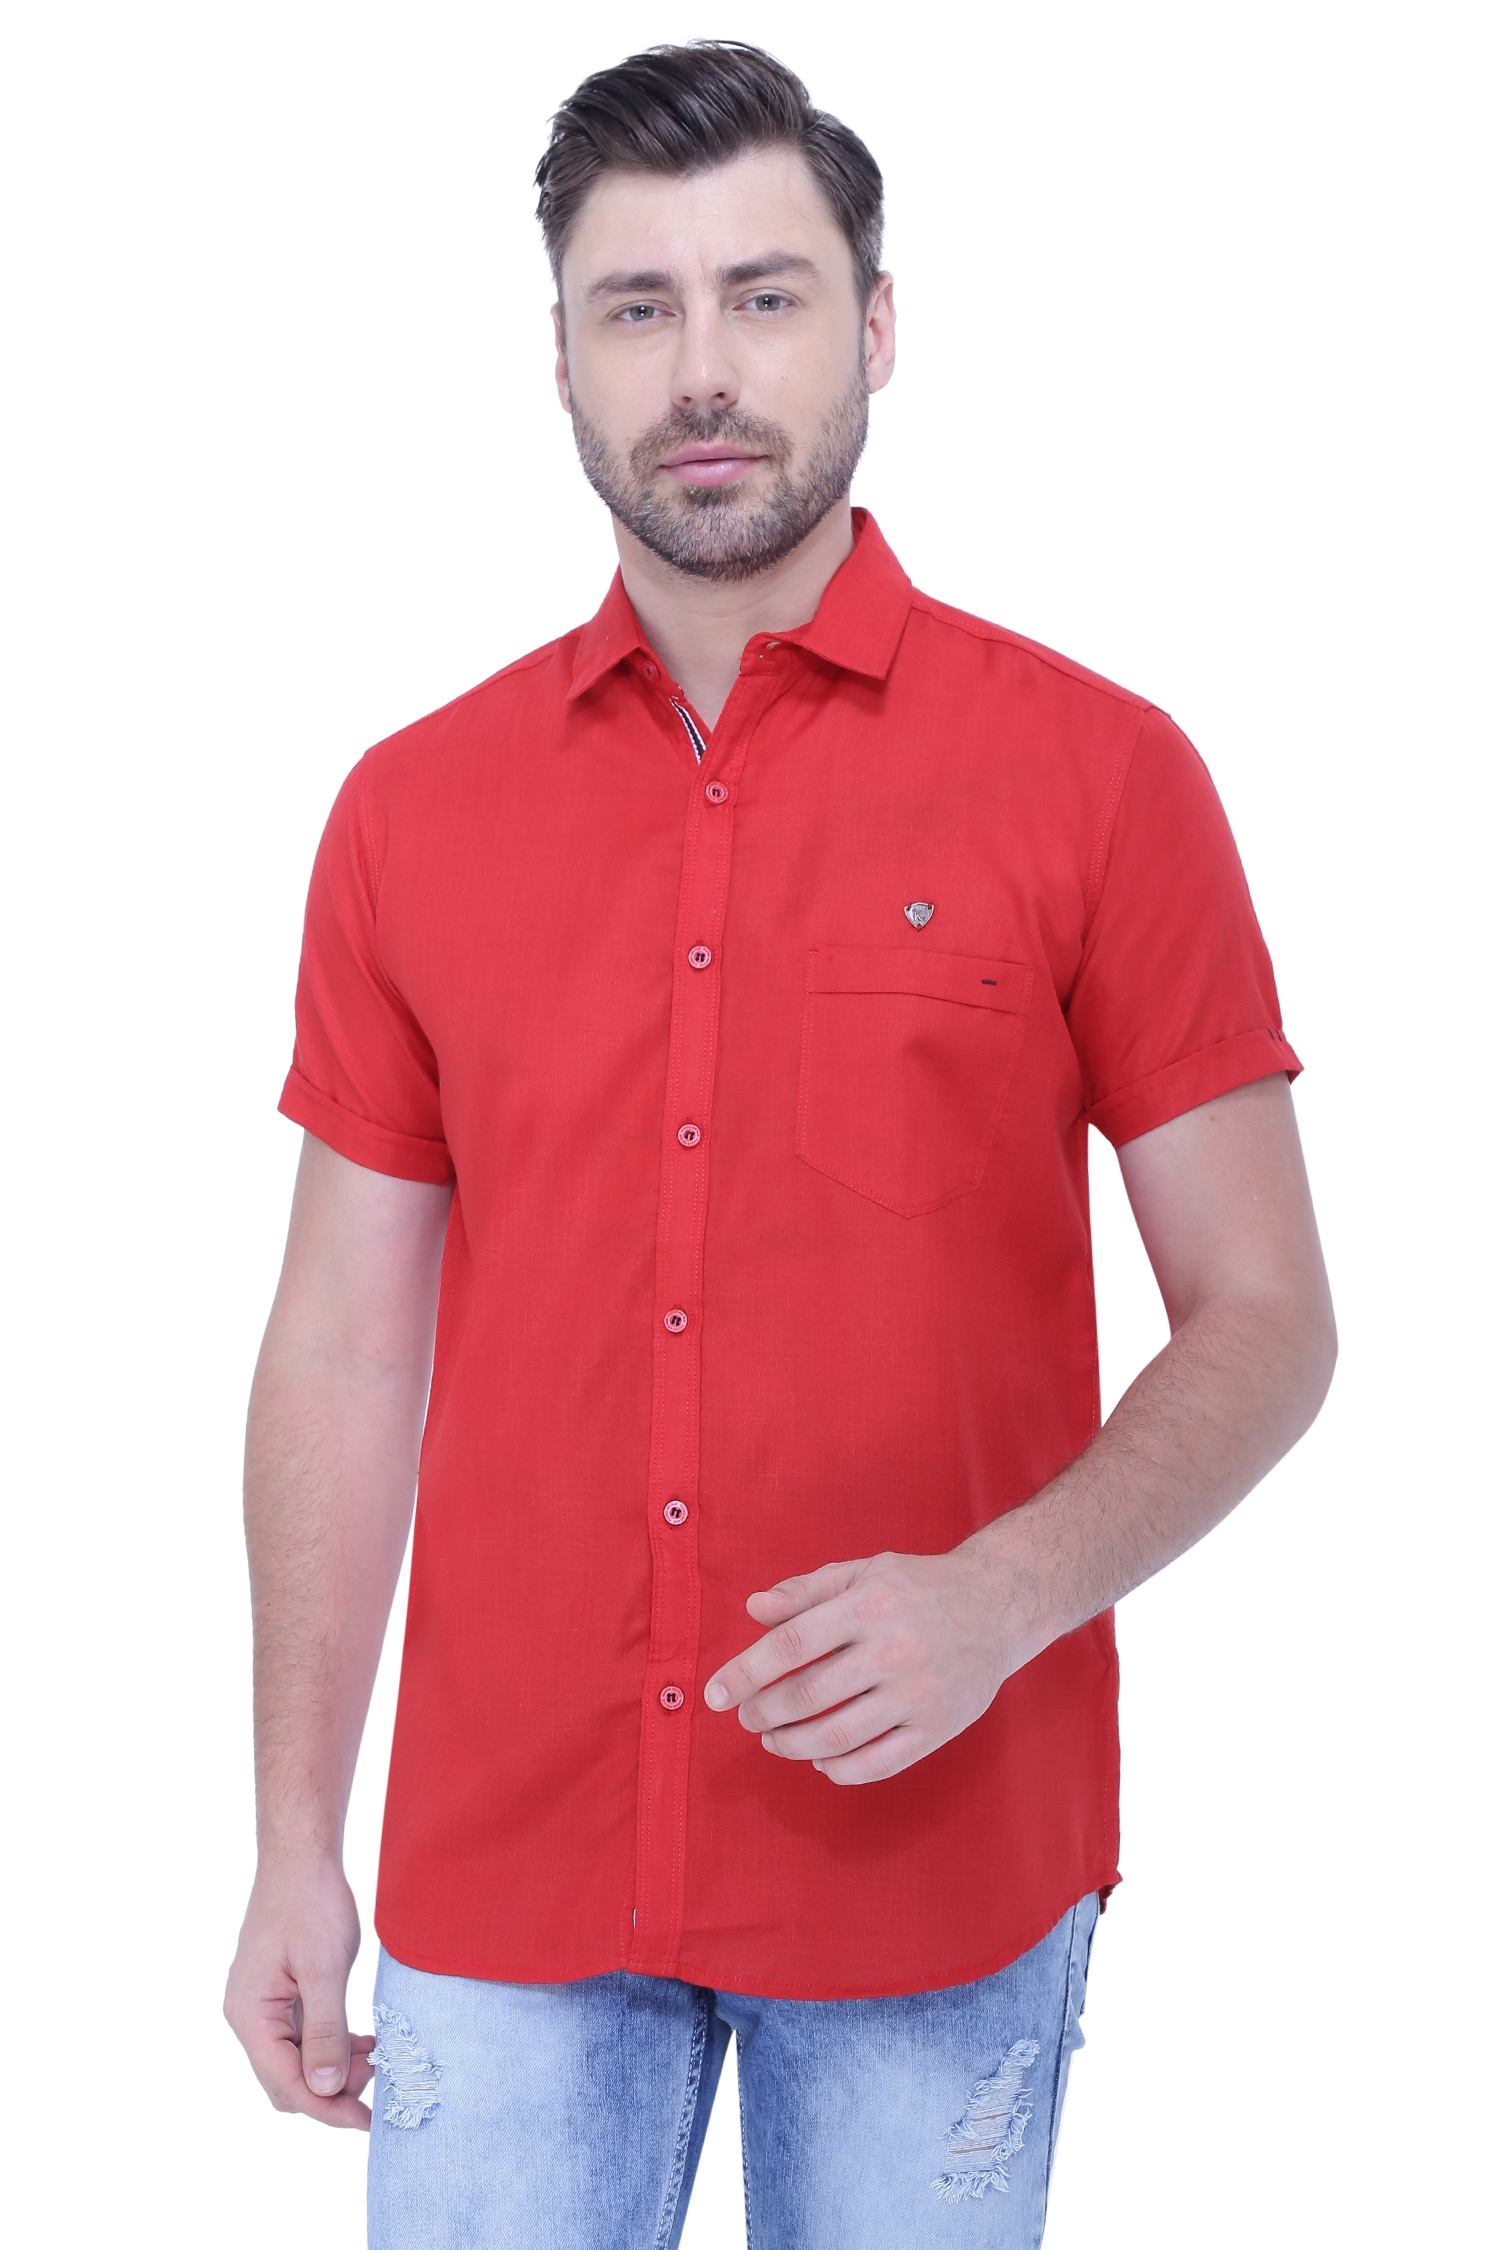 Kuons Avenue | Kuons Avenue Men's Linen Blend Half Sleeves Casual Shirt-KACLHS1228